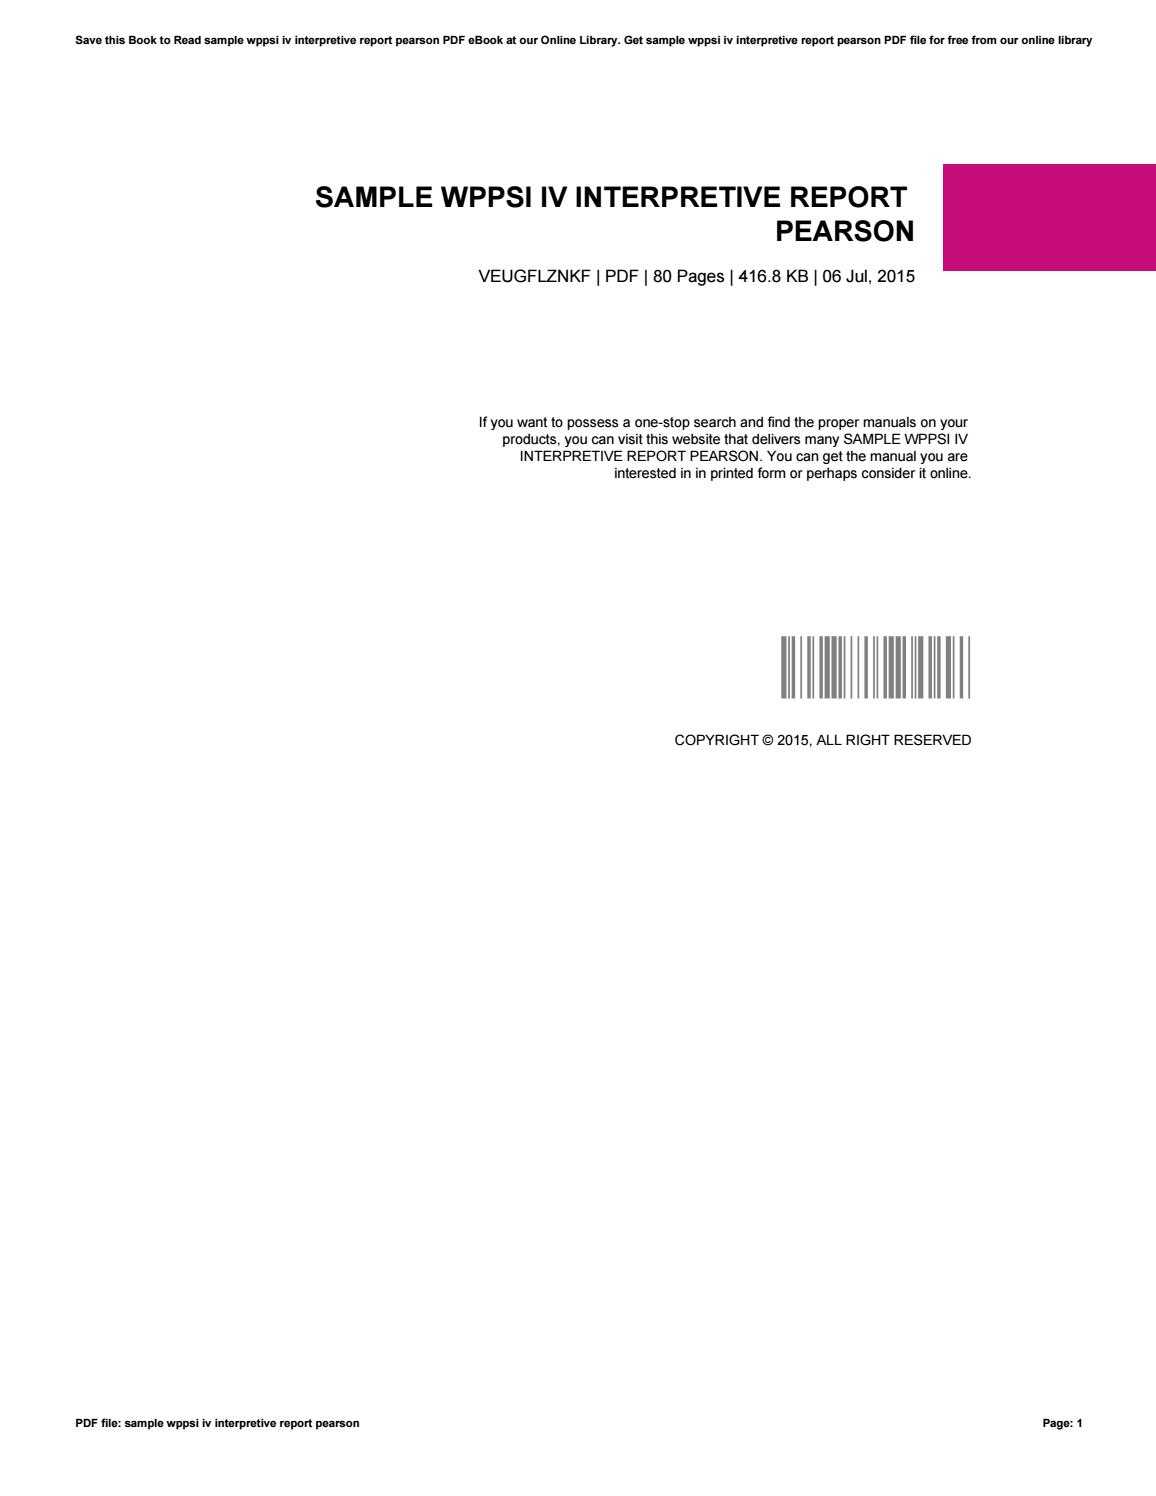 Sample Wppsi Iv Interpretive Report Pearson For Wppsi Iv Report Template